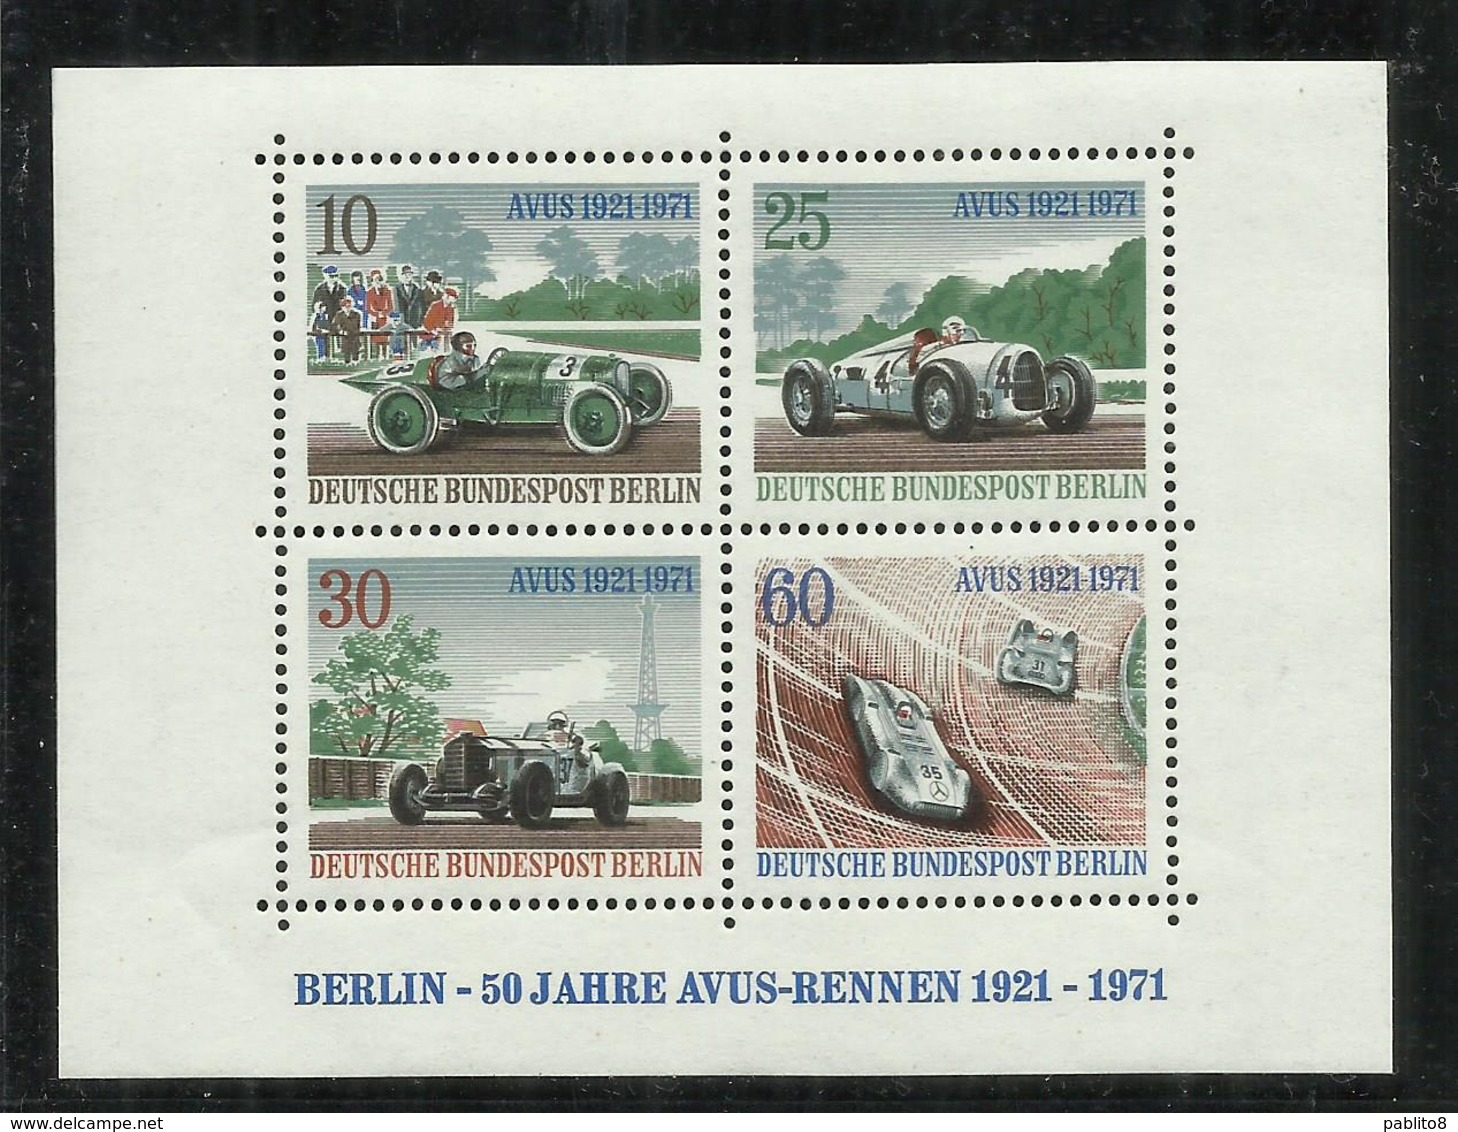 GERMANY  GERMANIA BERLIN BERLINO 1971 RACING CARS AVUS-RENNEN RALLYE AUTOMOBILI BLOCK SHEET BLOCCO FOGLIETTO MNH - Libretti